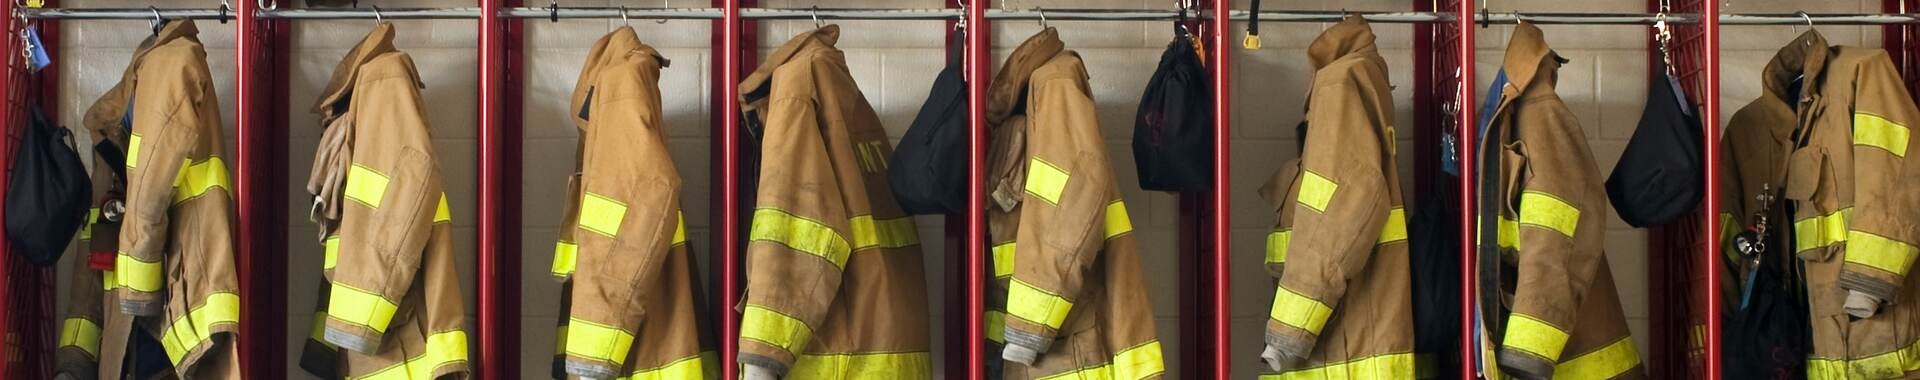 Fire fighter uniforms